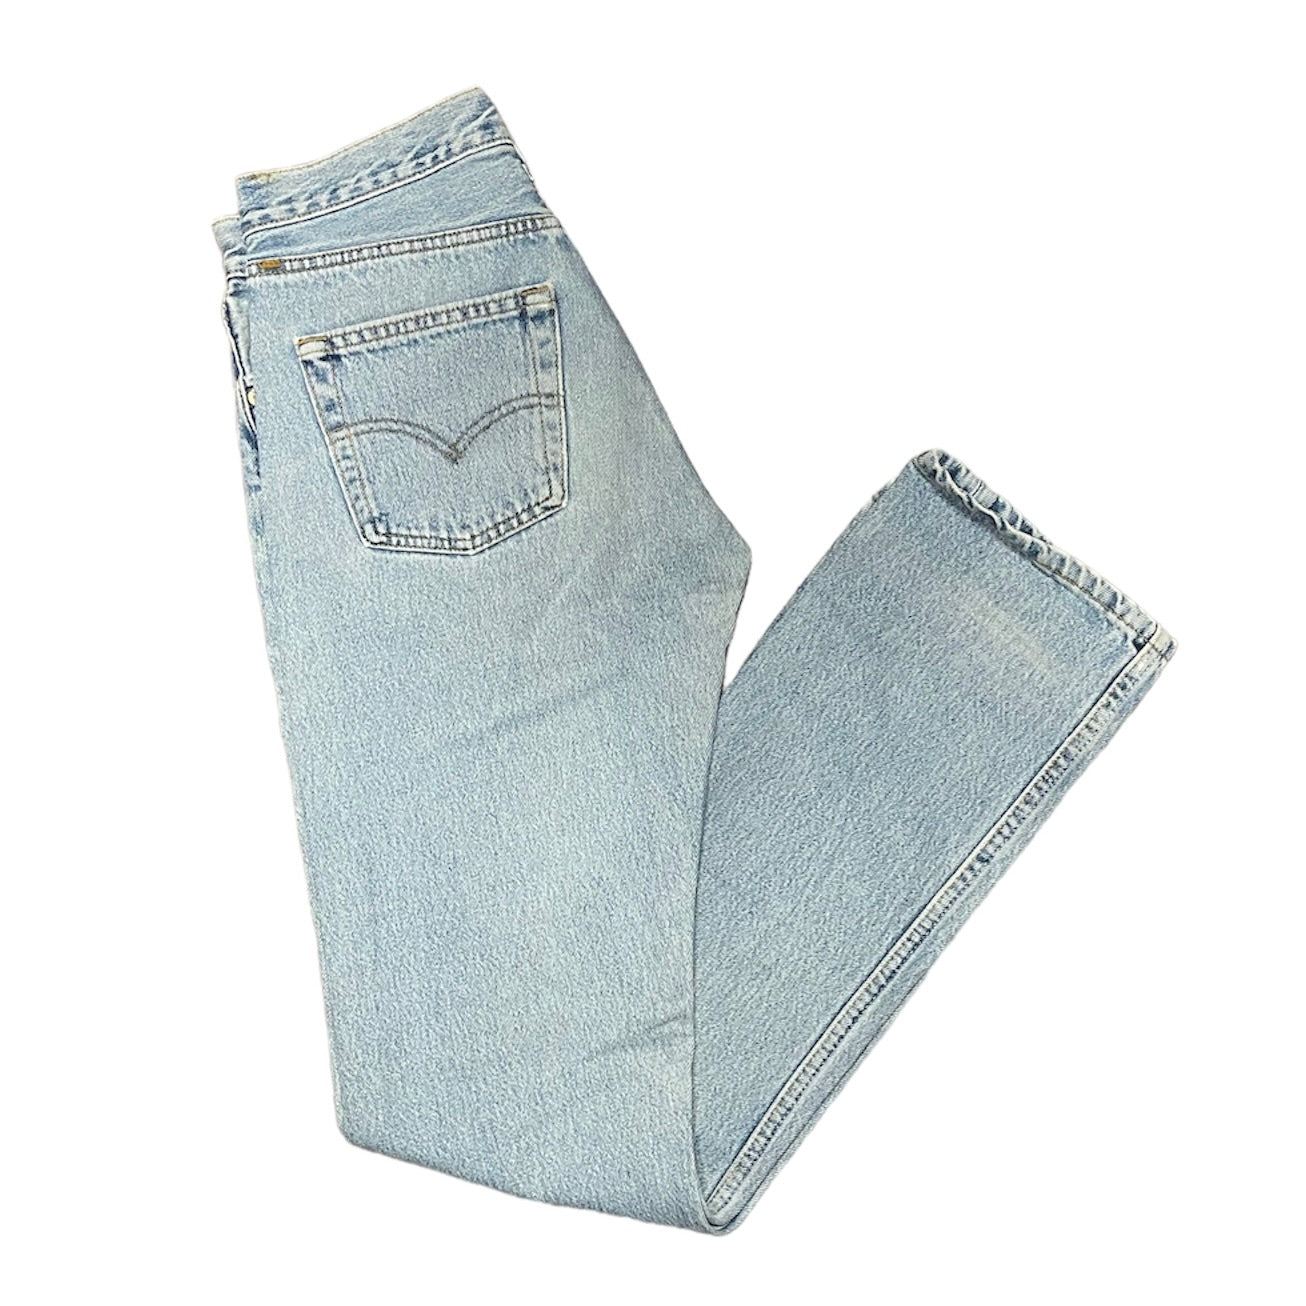 Vintage Levis 501 Washed Out Blue Jeans